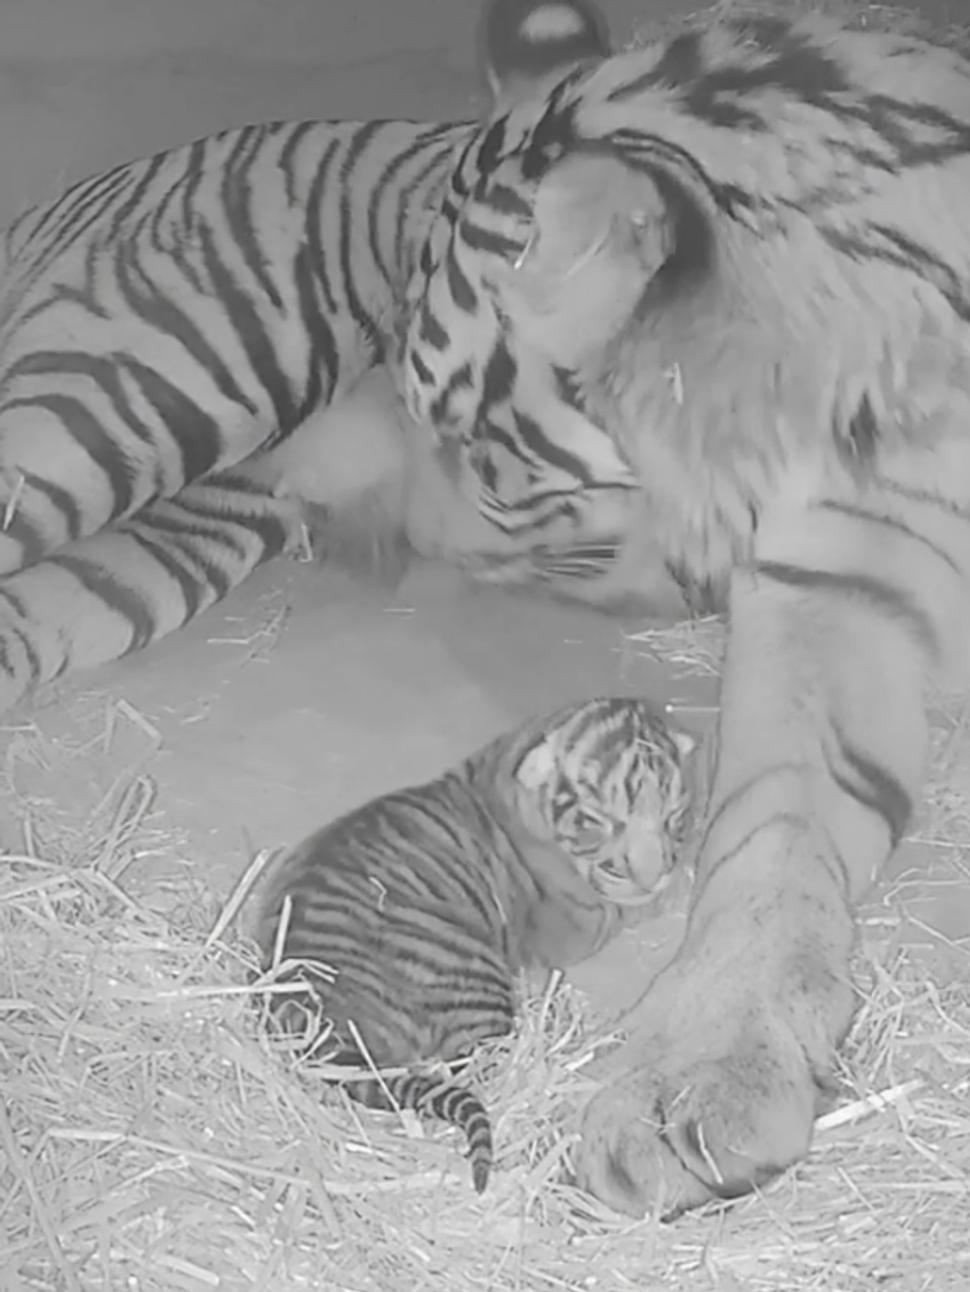 Zoo celebrates birth of endangered Sumatran tiger cubs, first since 1998